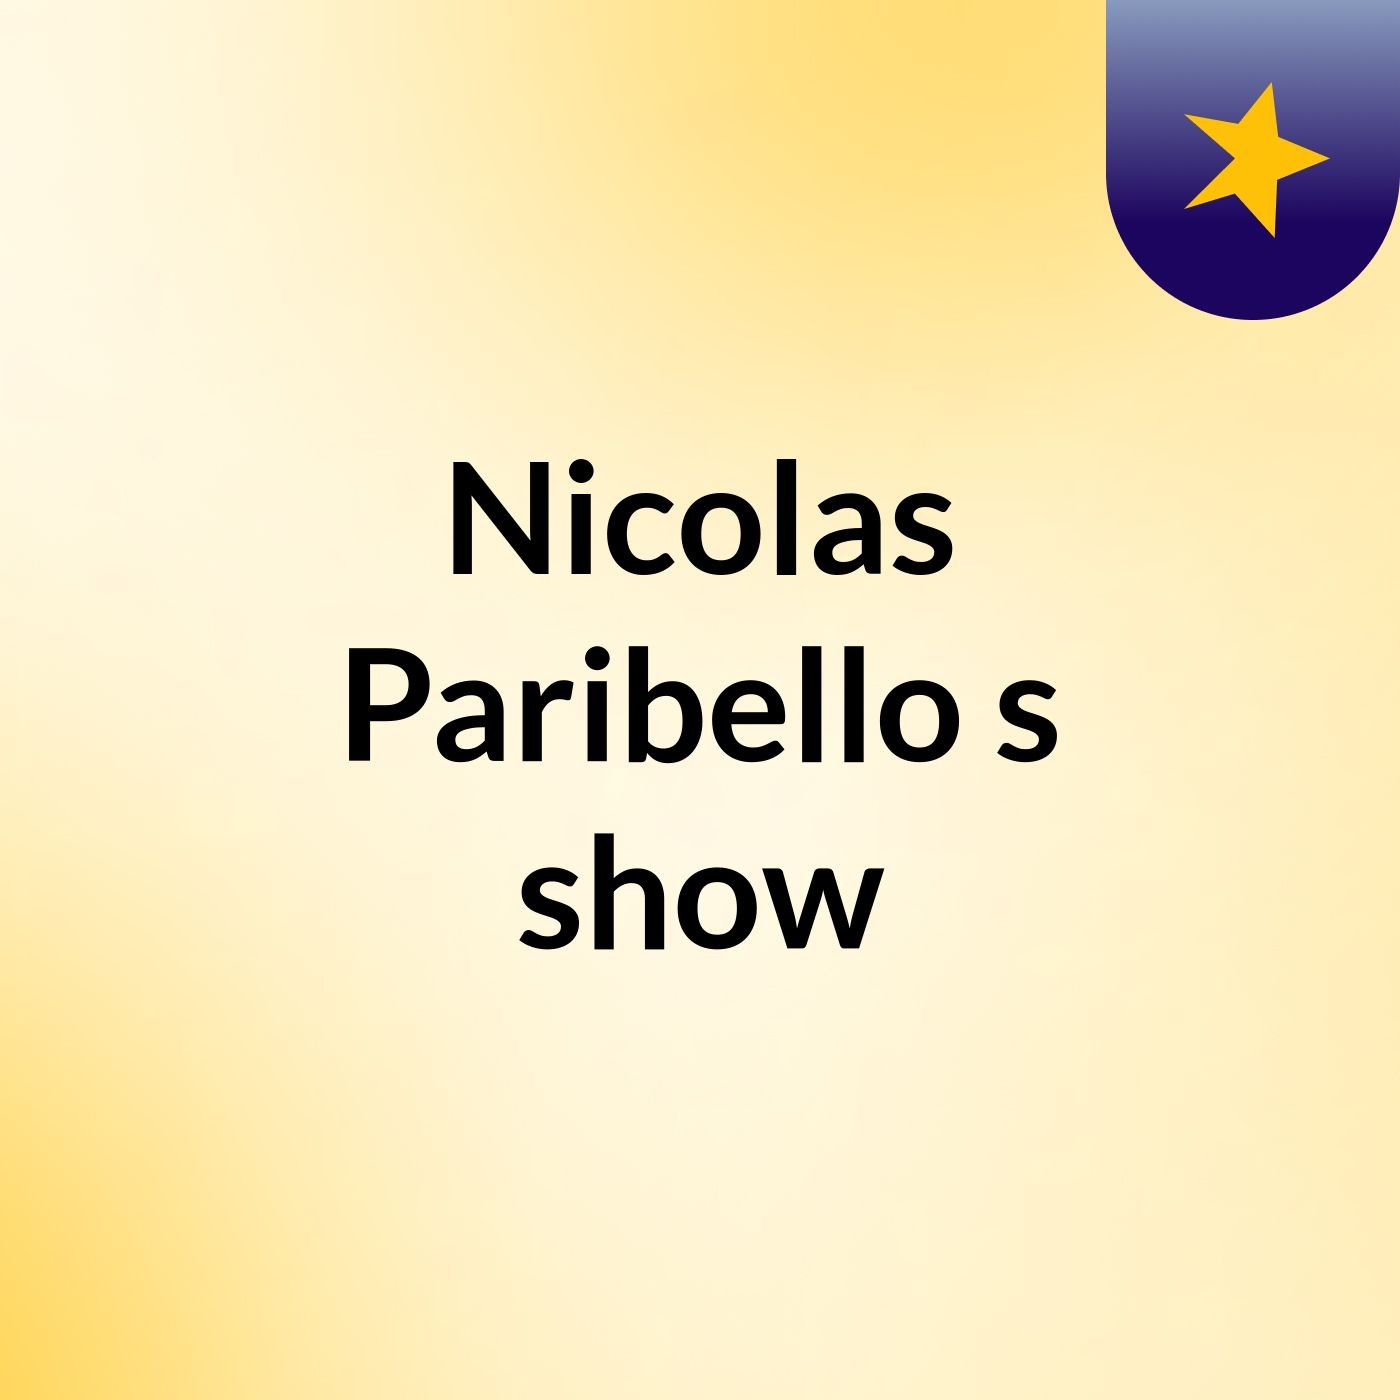 Nicolas Paribello's show